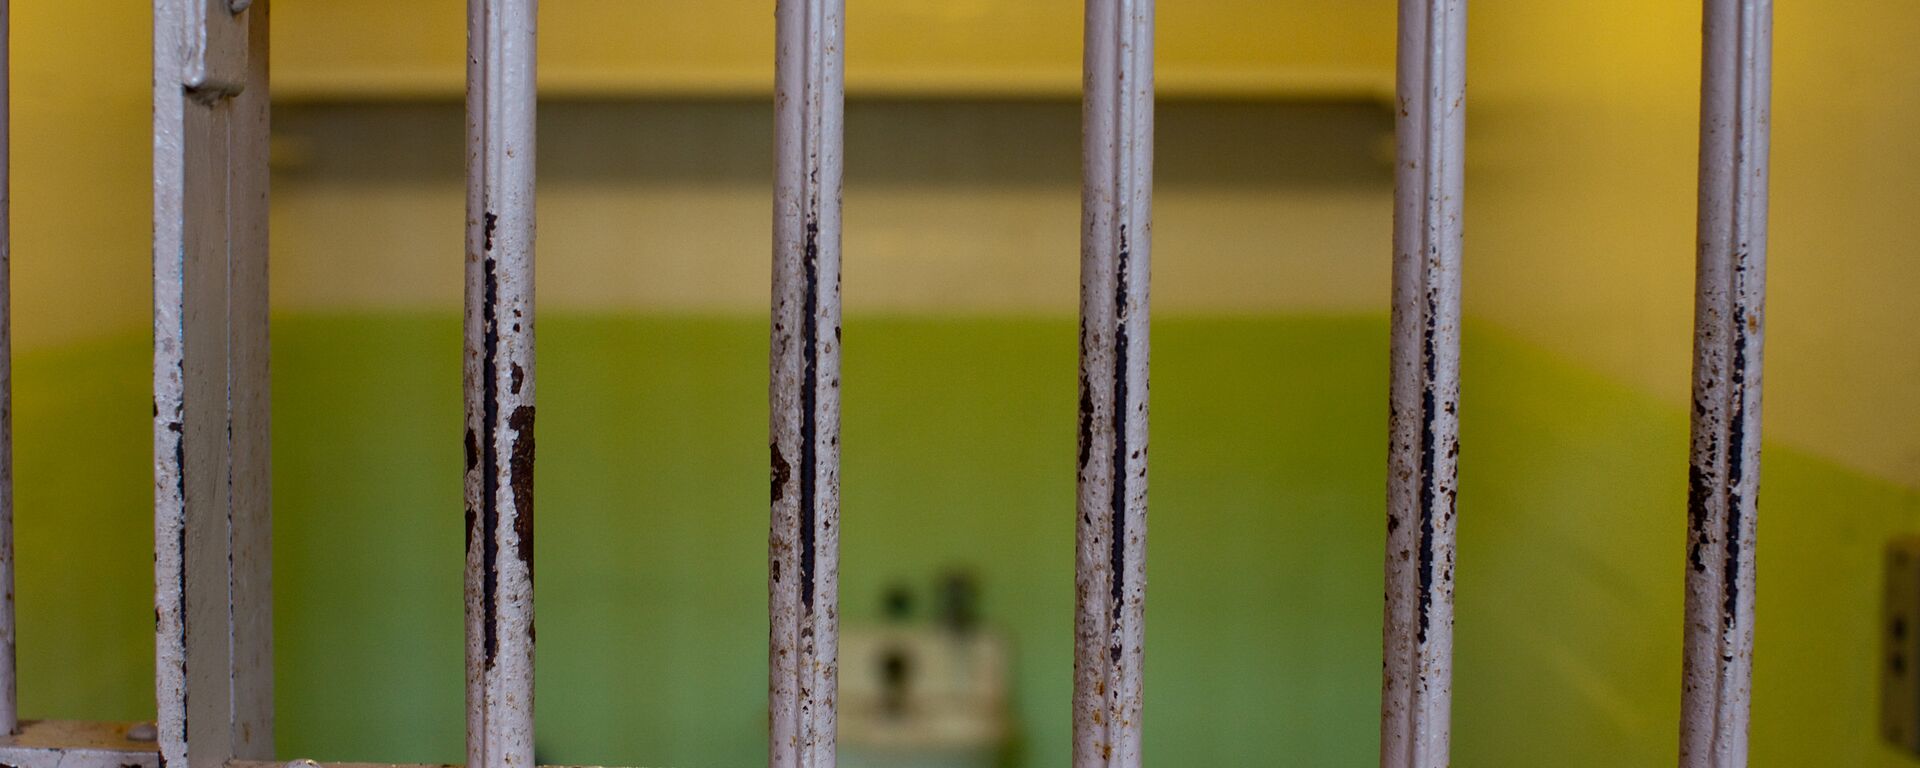 Las rejas de la cárcel (imagen referencial) - Sputnik Mundo, 1920, 17.03.2021